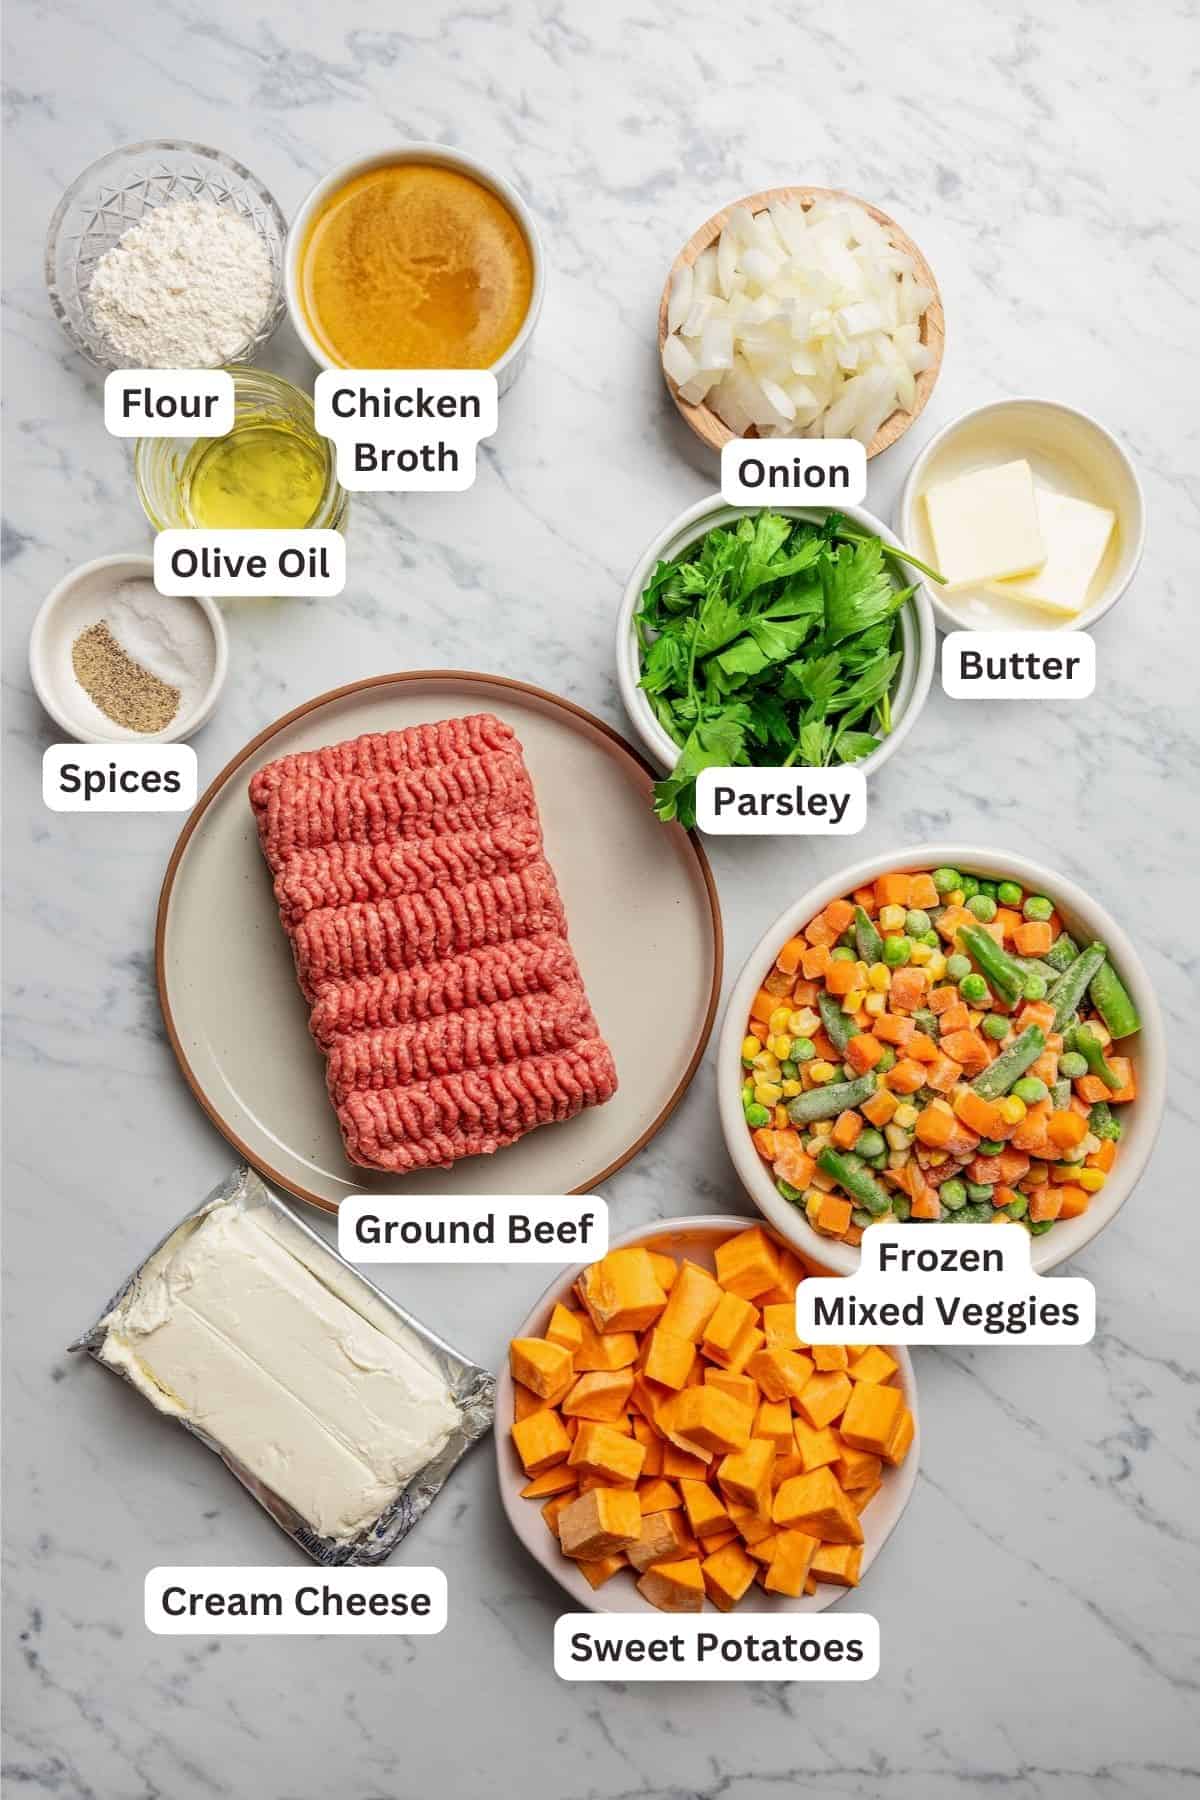 Ingredients for Sweet Potato Shepherd’s Pie.